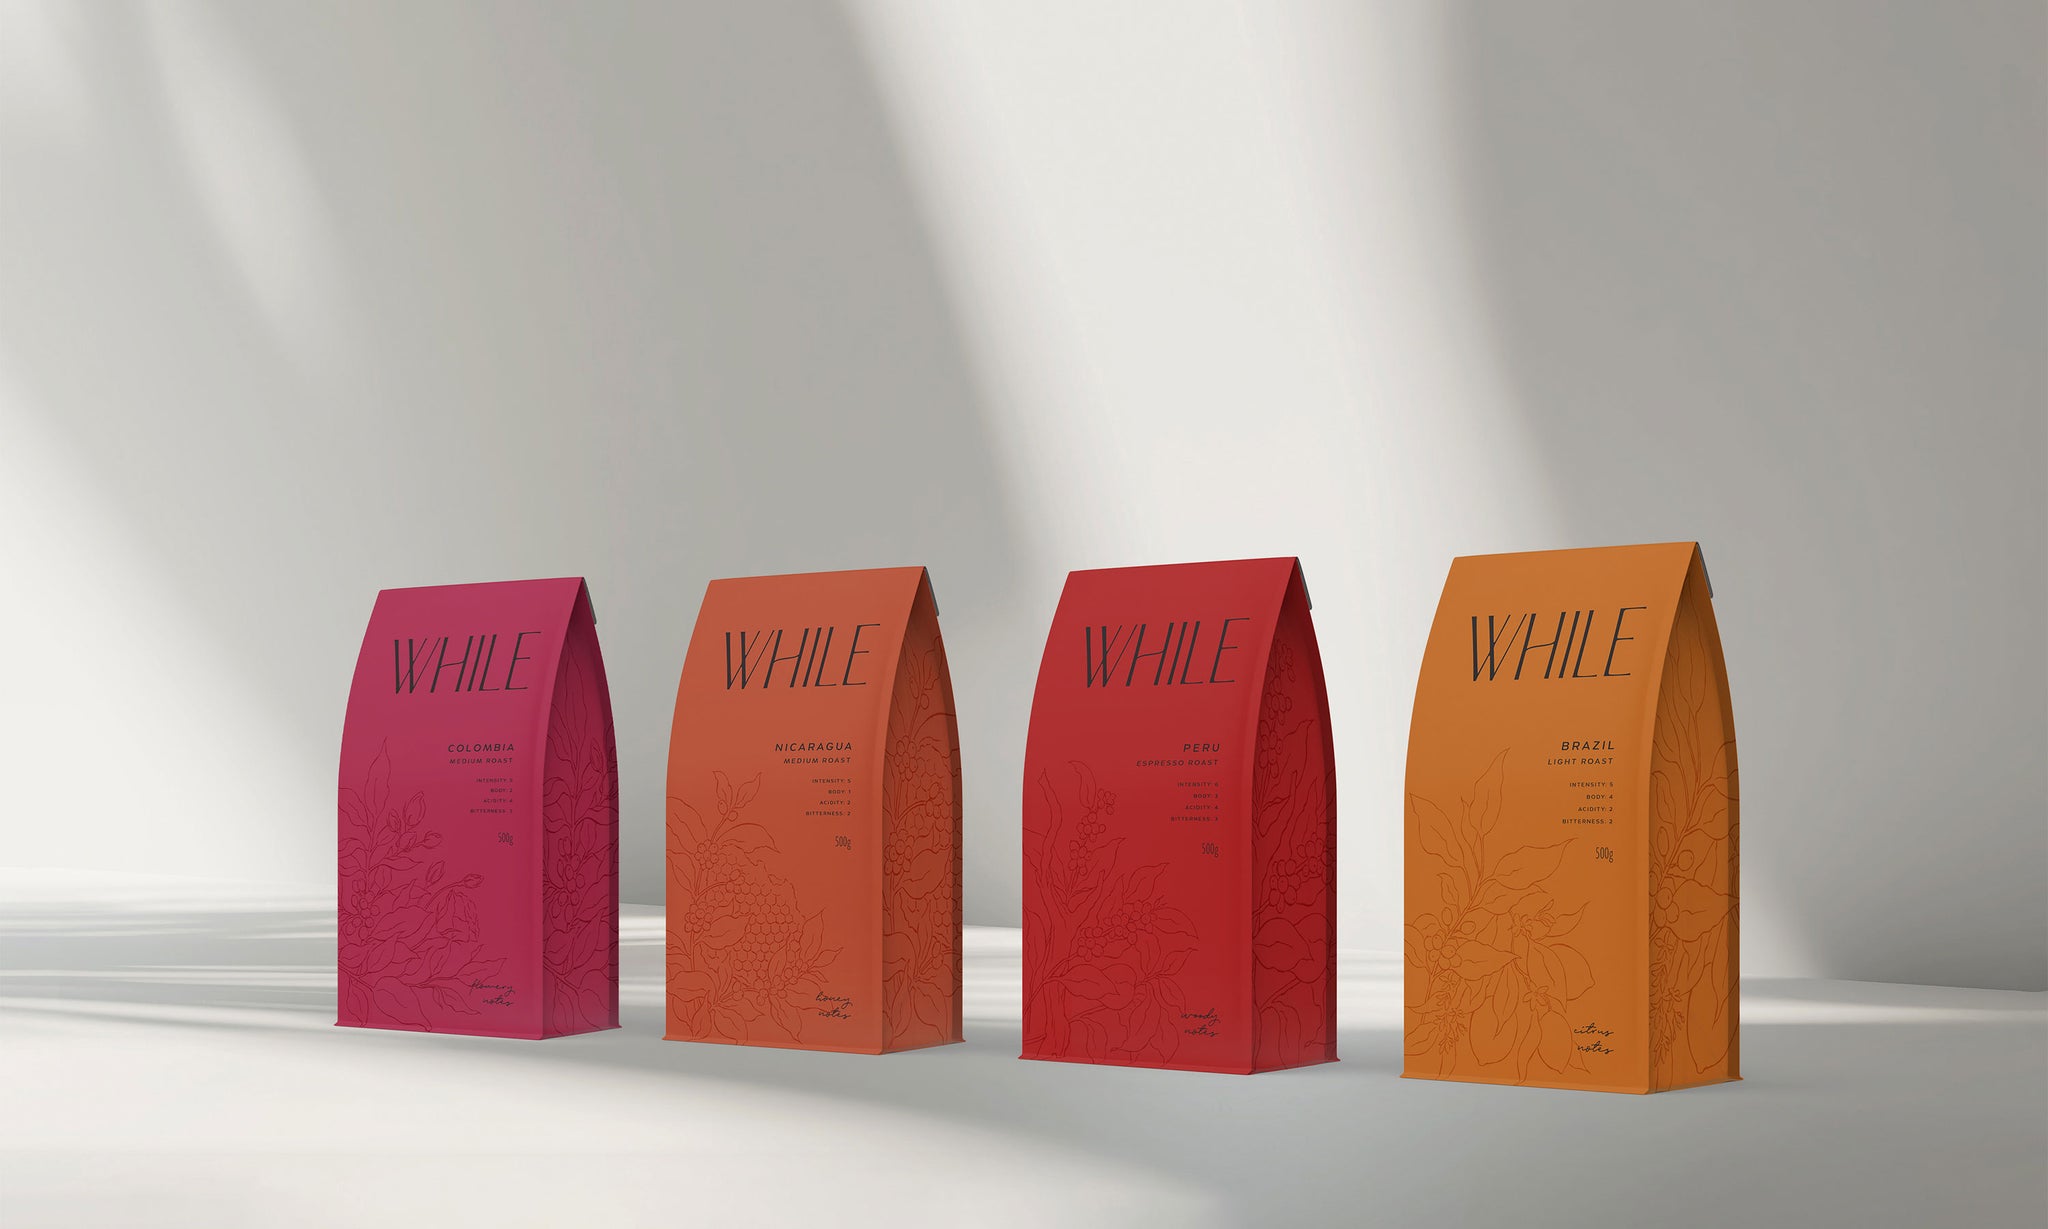 Karolina Król Studio While Coffee minimalist brand identity and custom illustrated packaging design